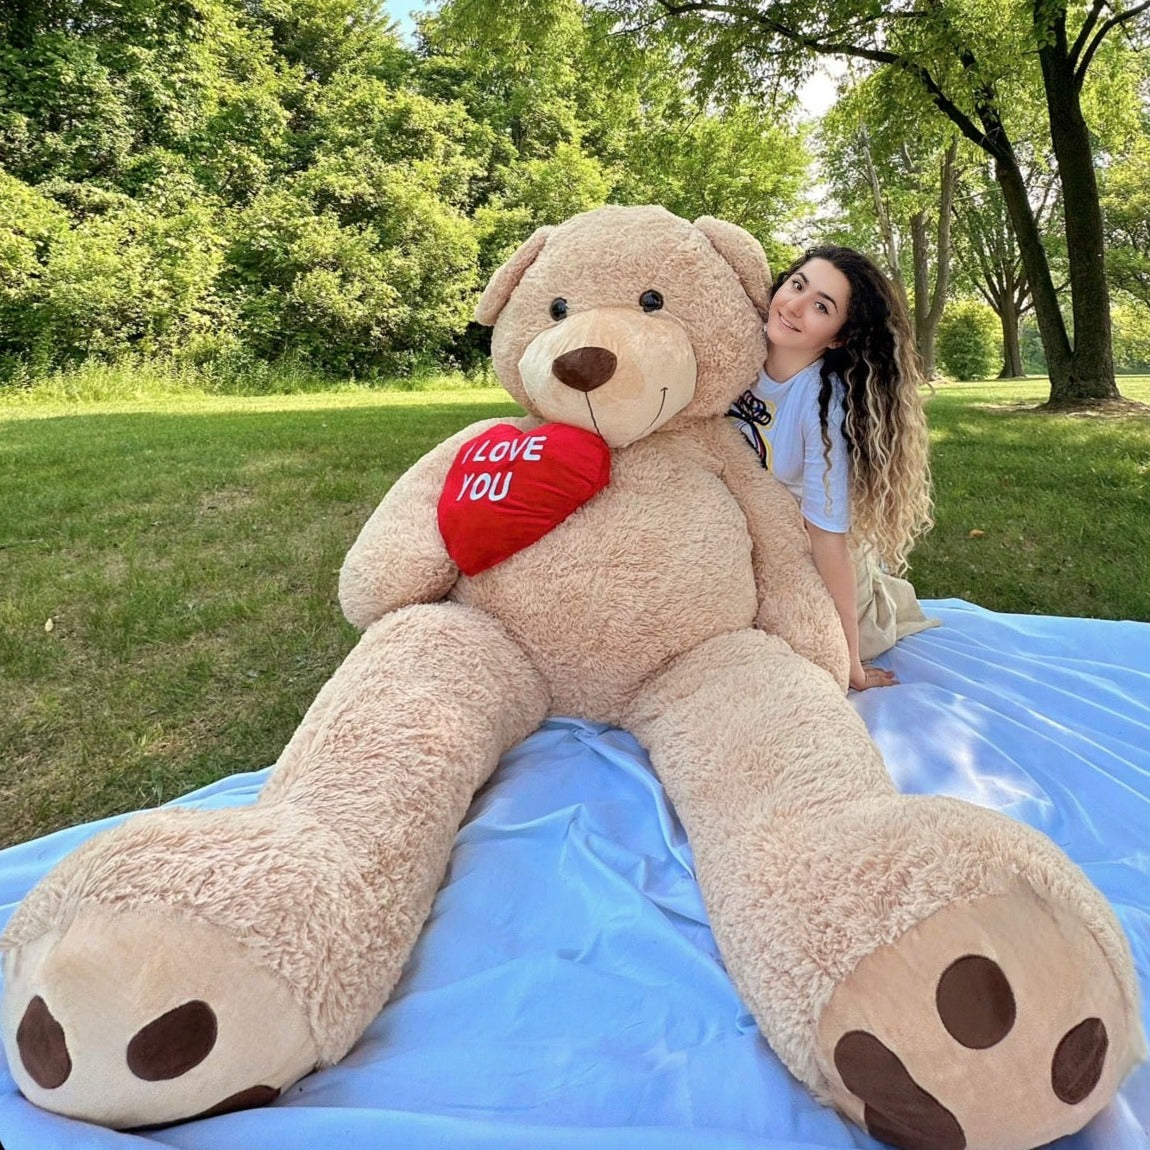 Giant Teddy Bear Stuffed Animals, Brown, 6 FT - MorisMos Stuffed Animals